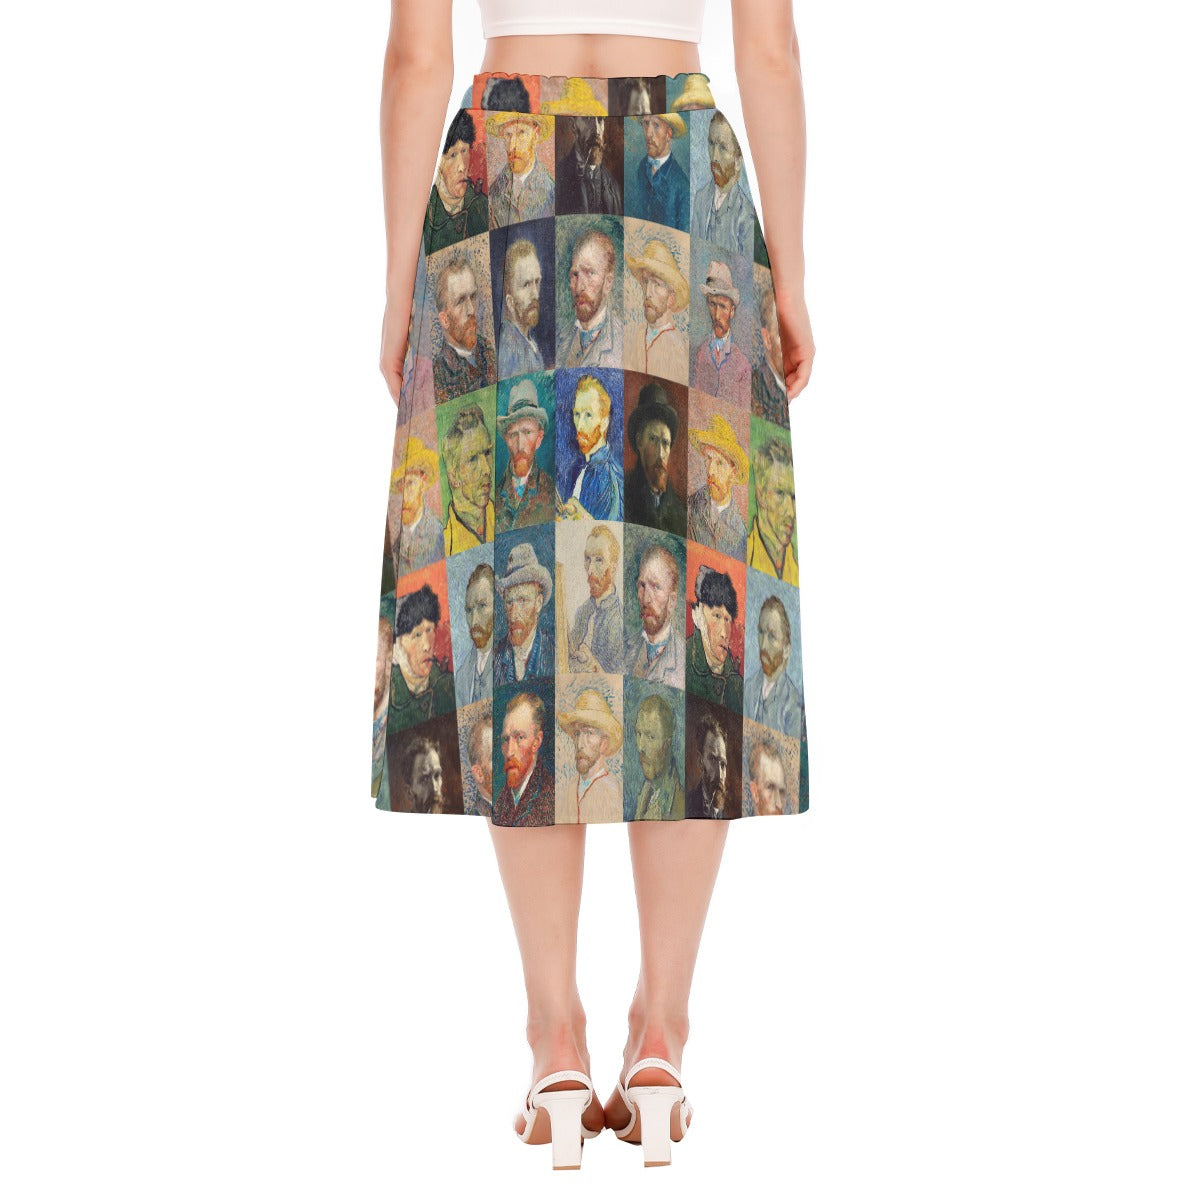 Model wearing the Van Gogh Chiffon Skirt